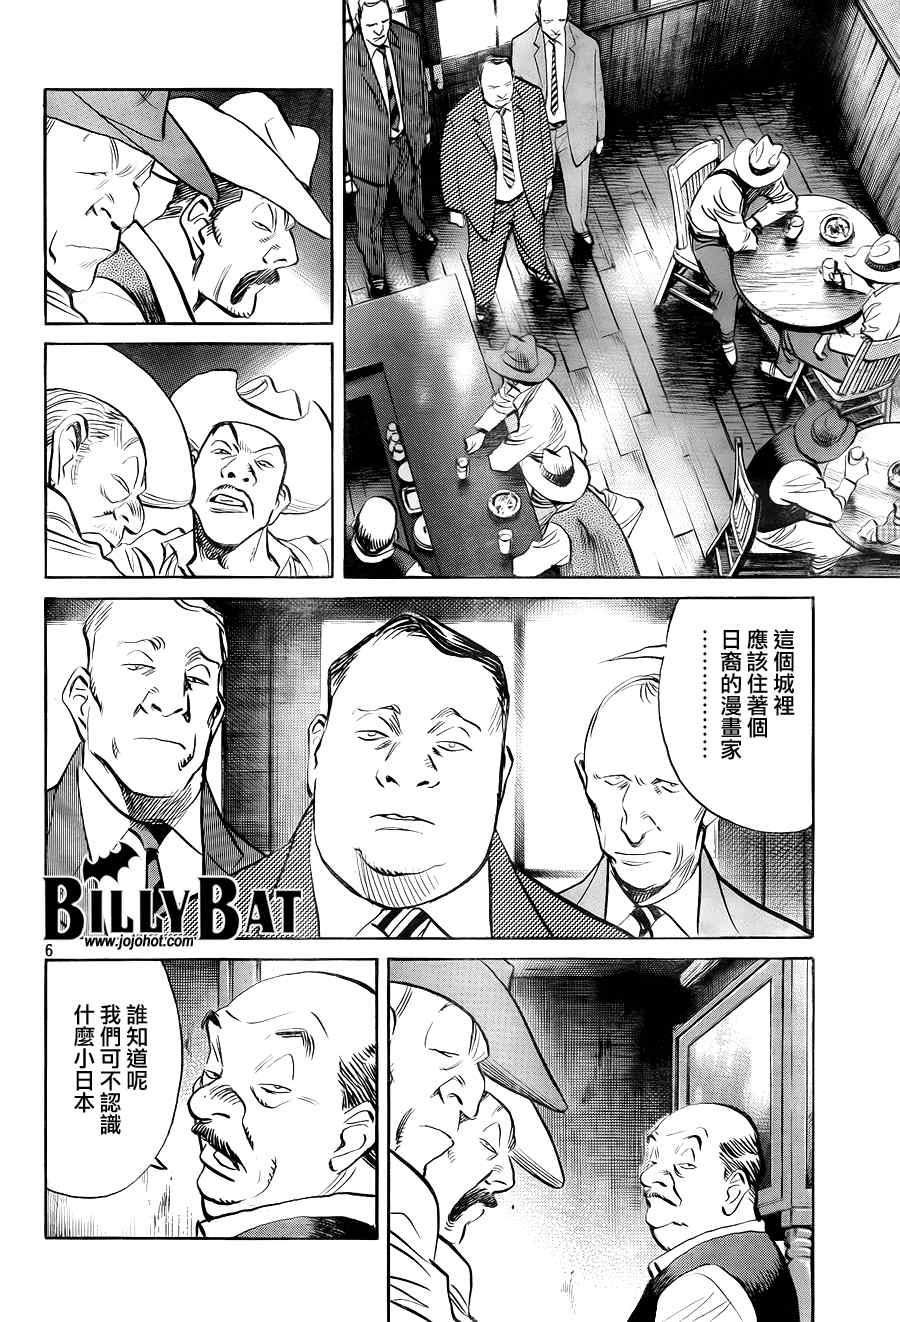 Billy_Bat - 第37话 - 6